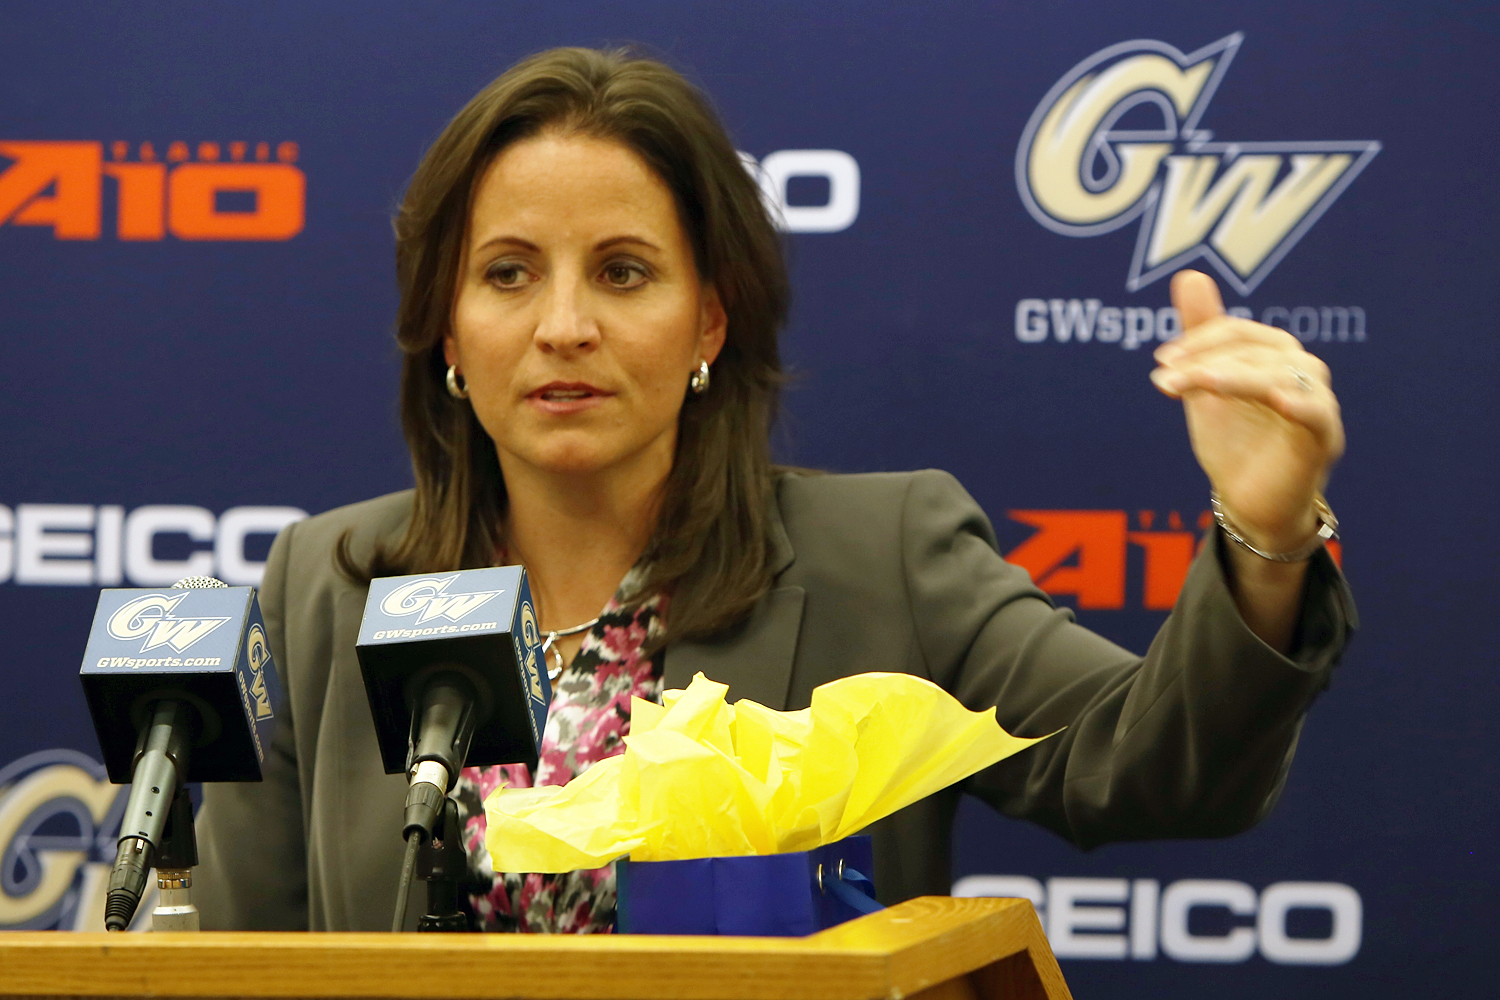 GW Names Jennifer Rizzotti New Women's Basketball Coach | GW Today | The George Washington University